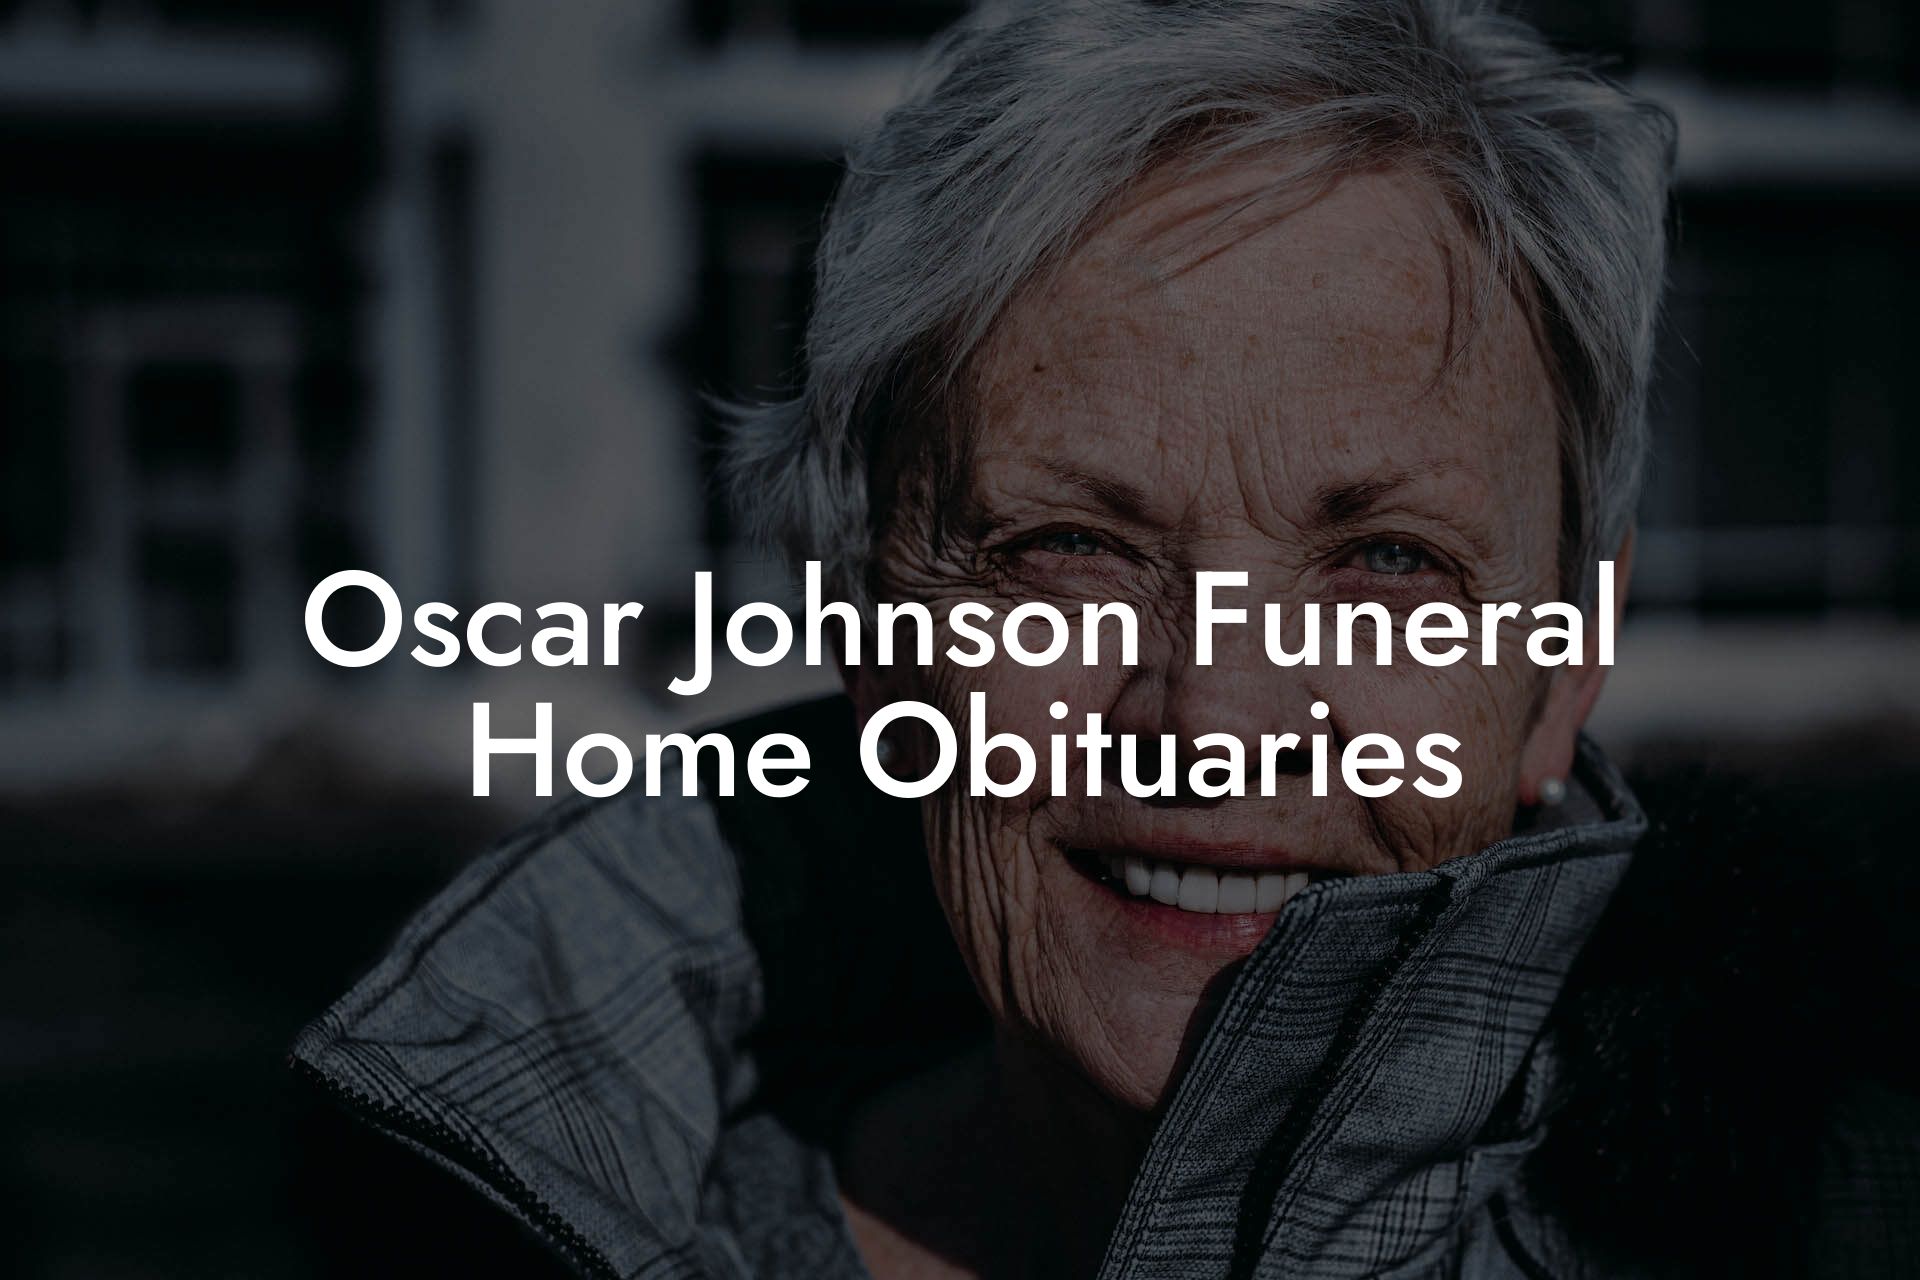 Oscar Johnson Funeral Home Obituaries